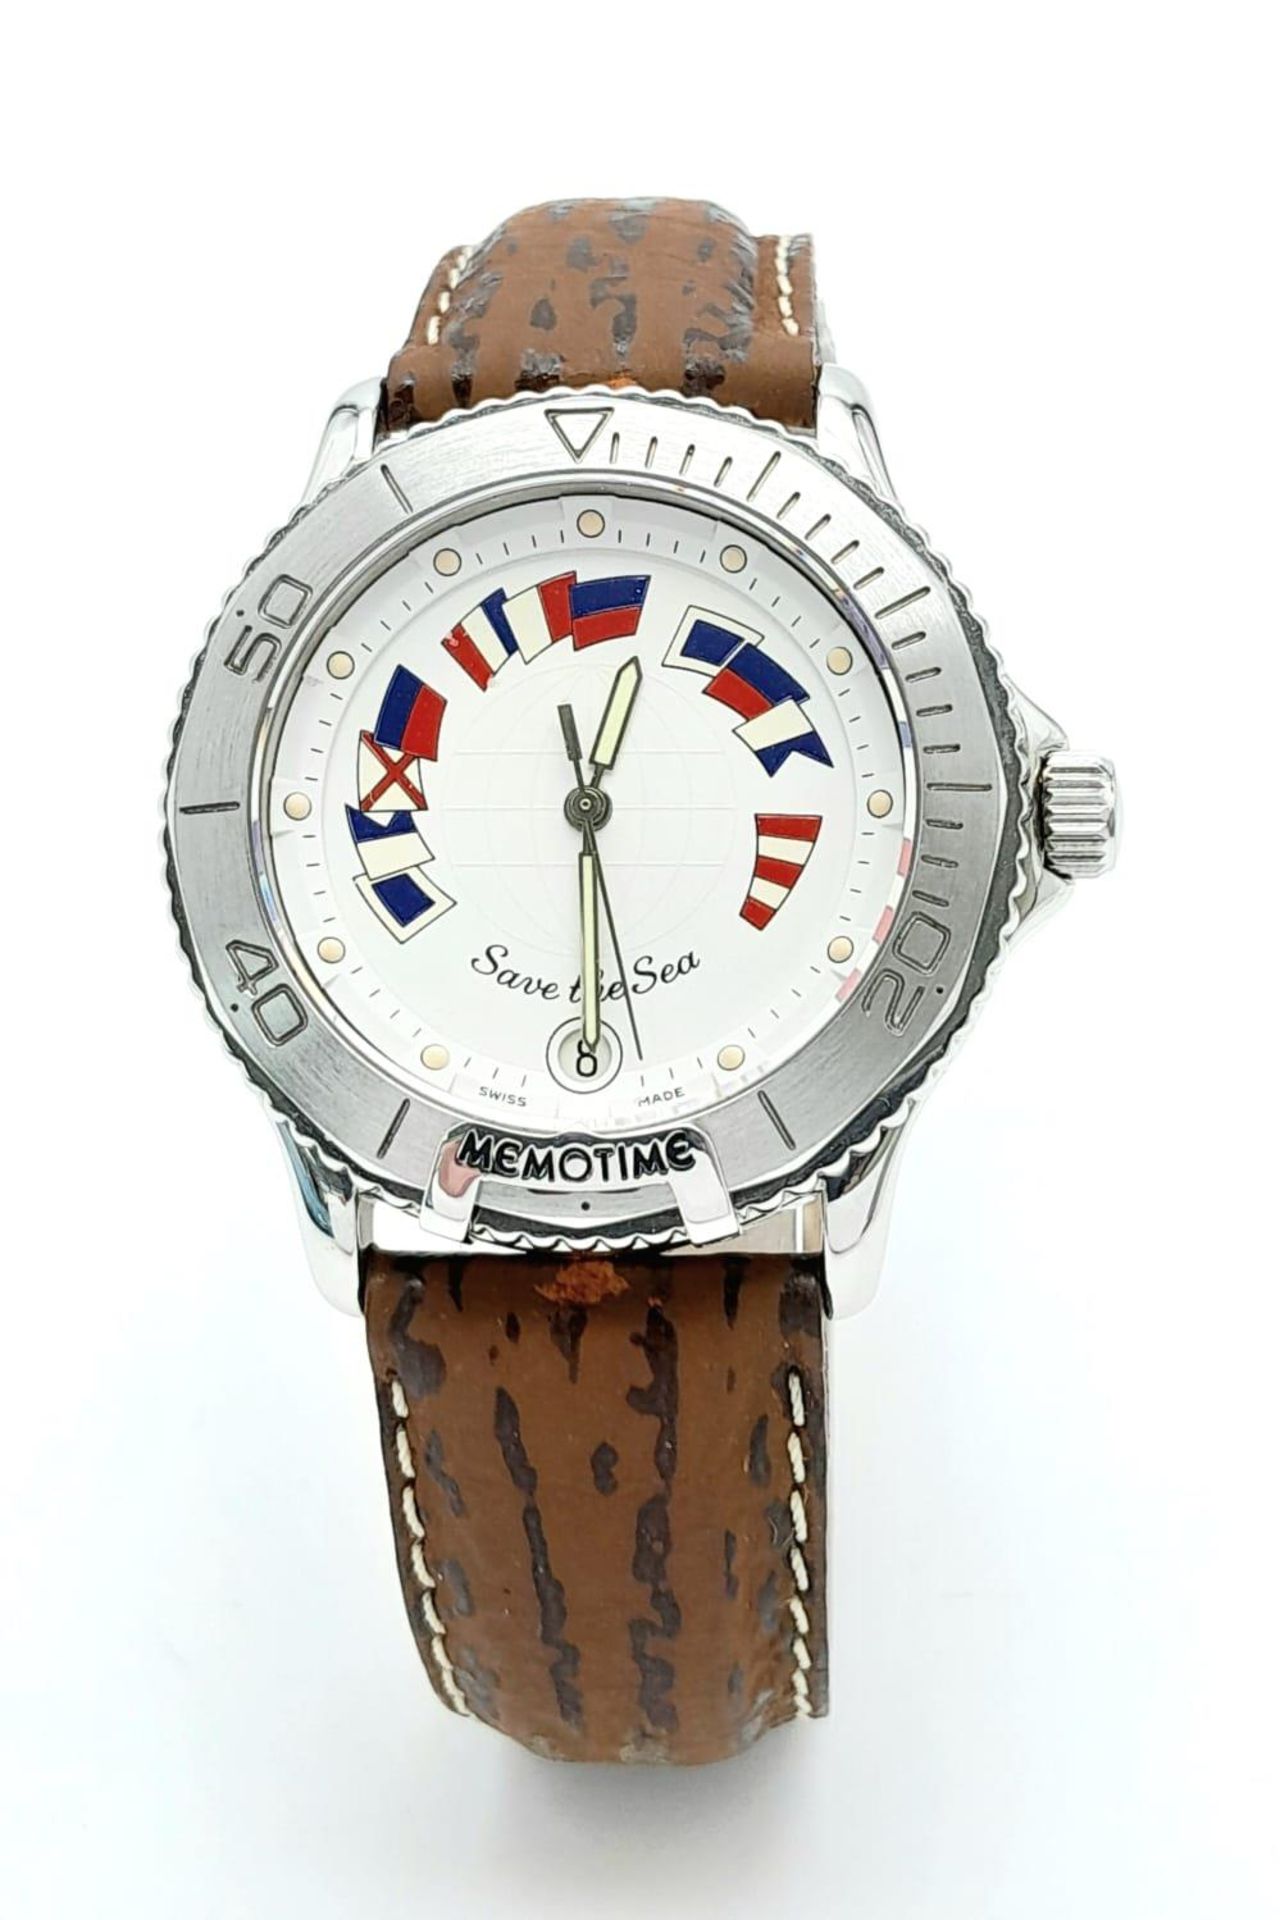 A Corum Memotime - Save the Sea Limited Edition Quartz Unisex Watch. Brown leather strap. - Bild 3 aus 7